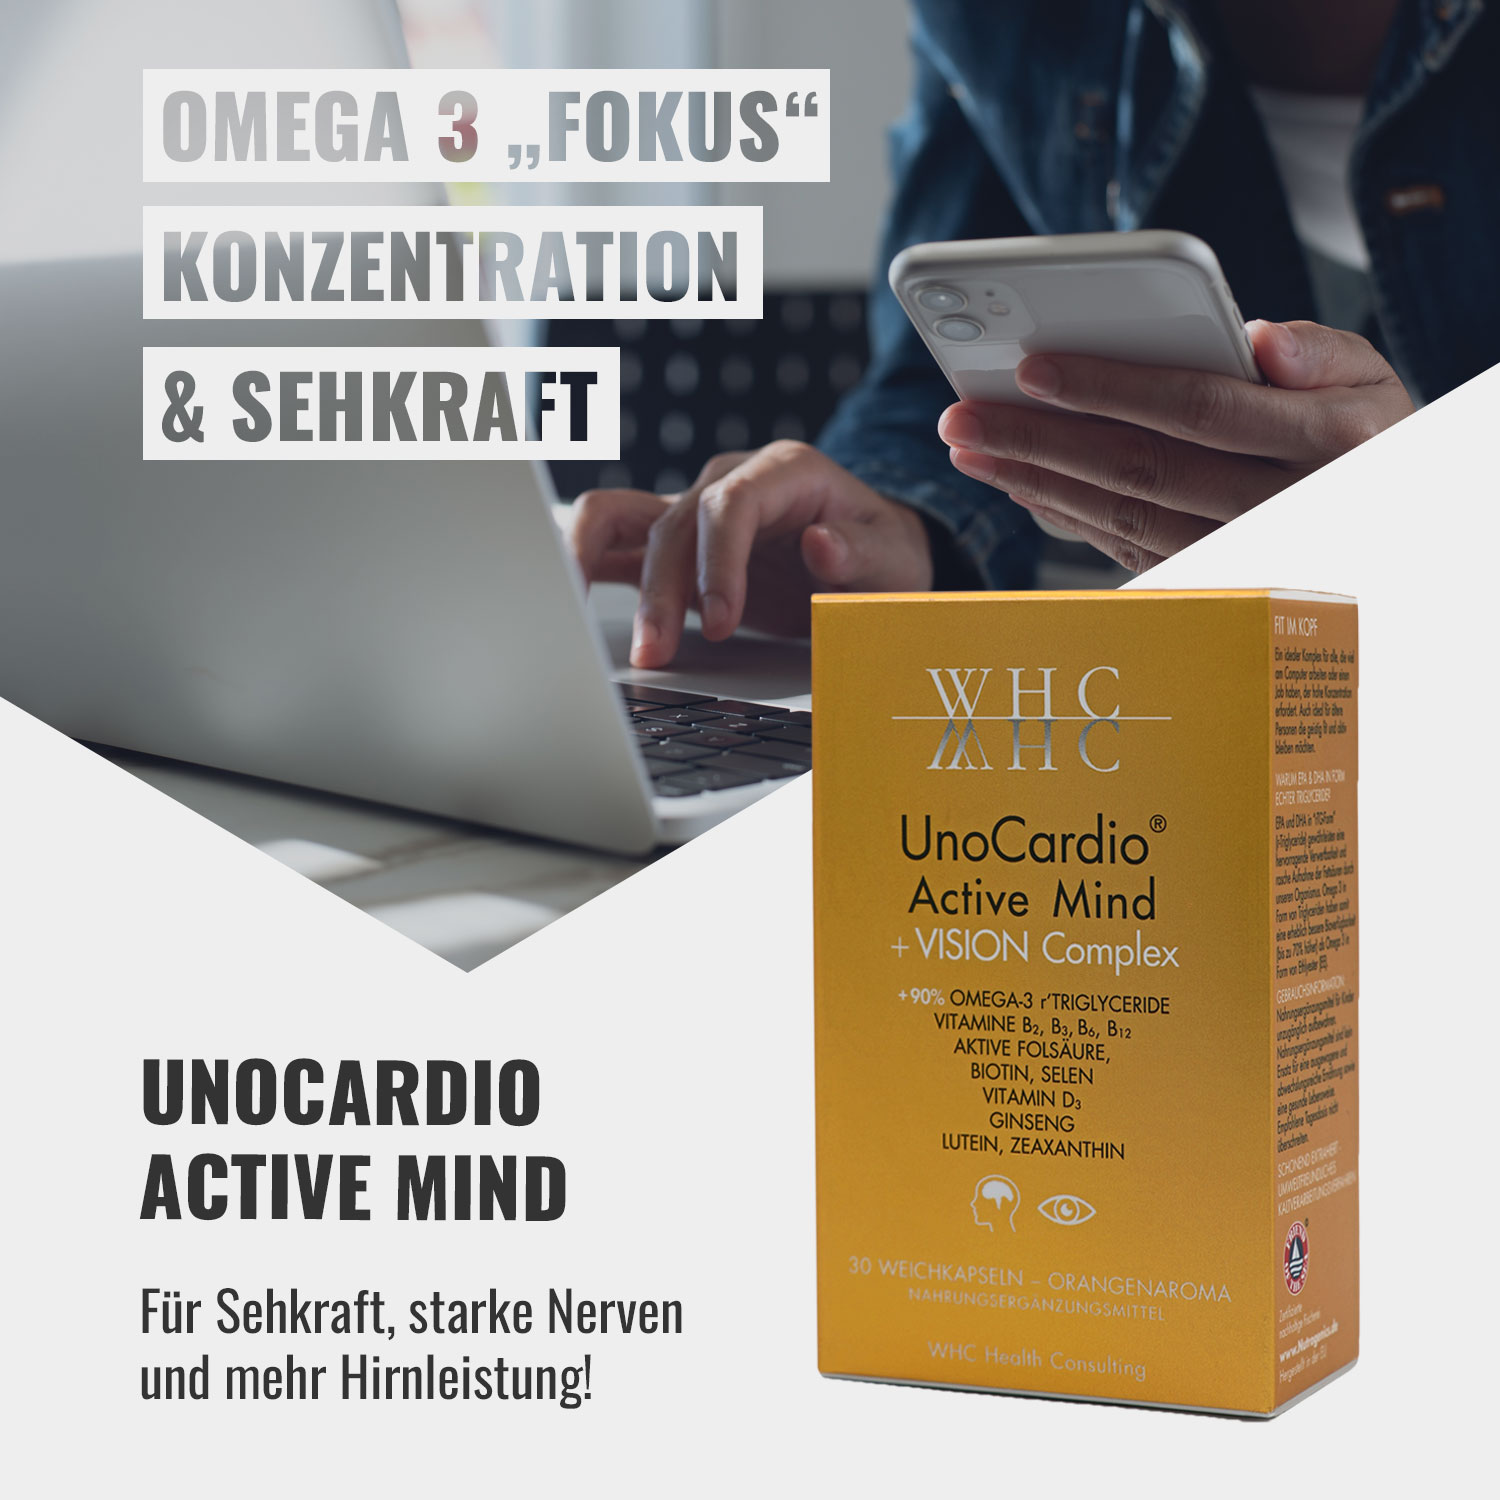 WHC Unocardio Active Mind + Vision Complex Omega 3